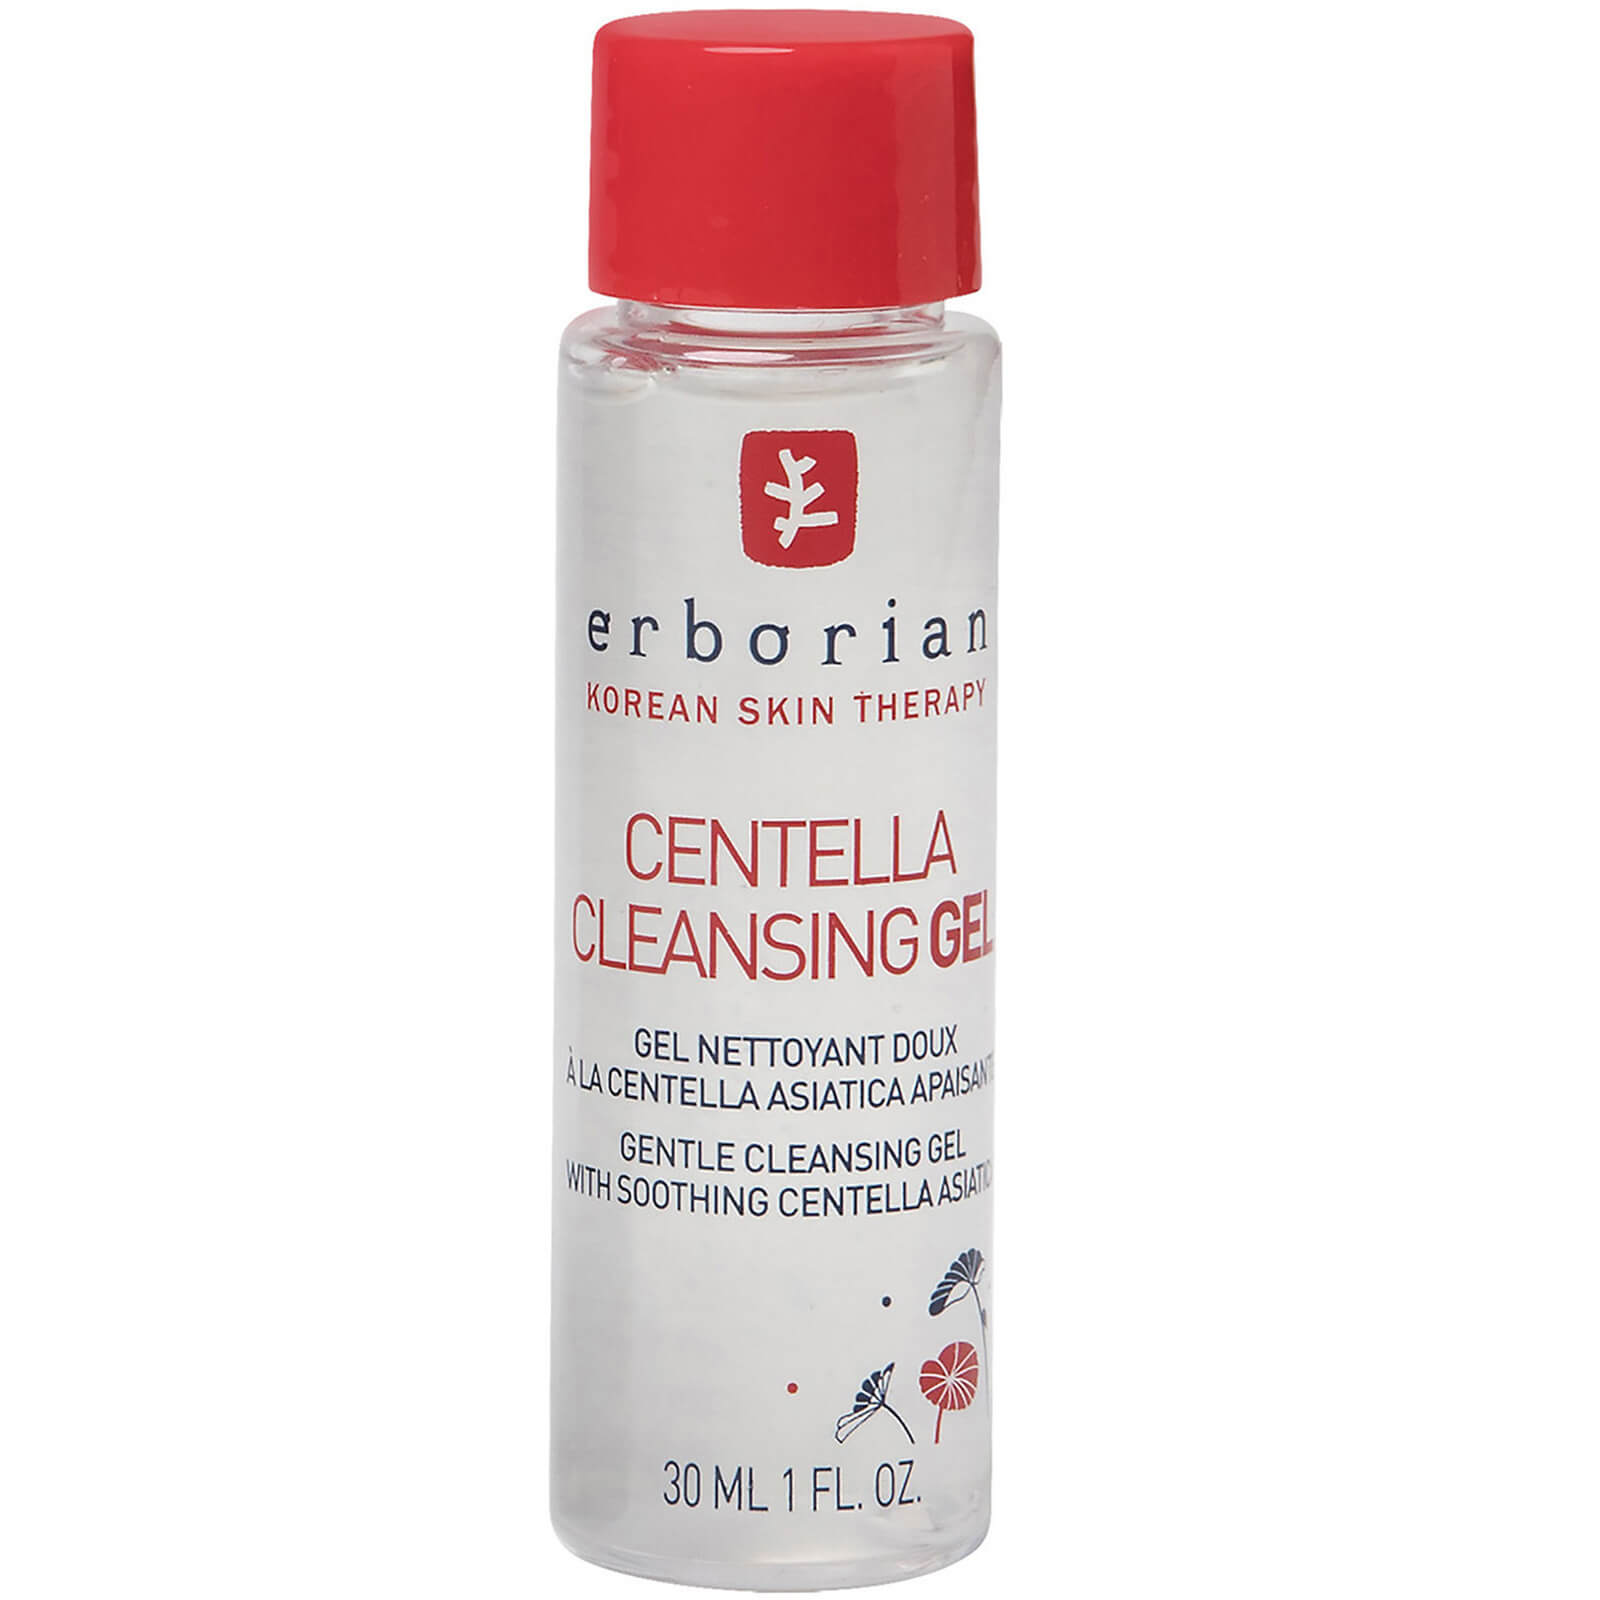 Centella Cleansing Gel - 30ml